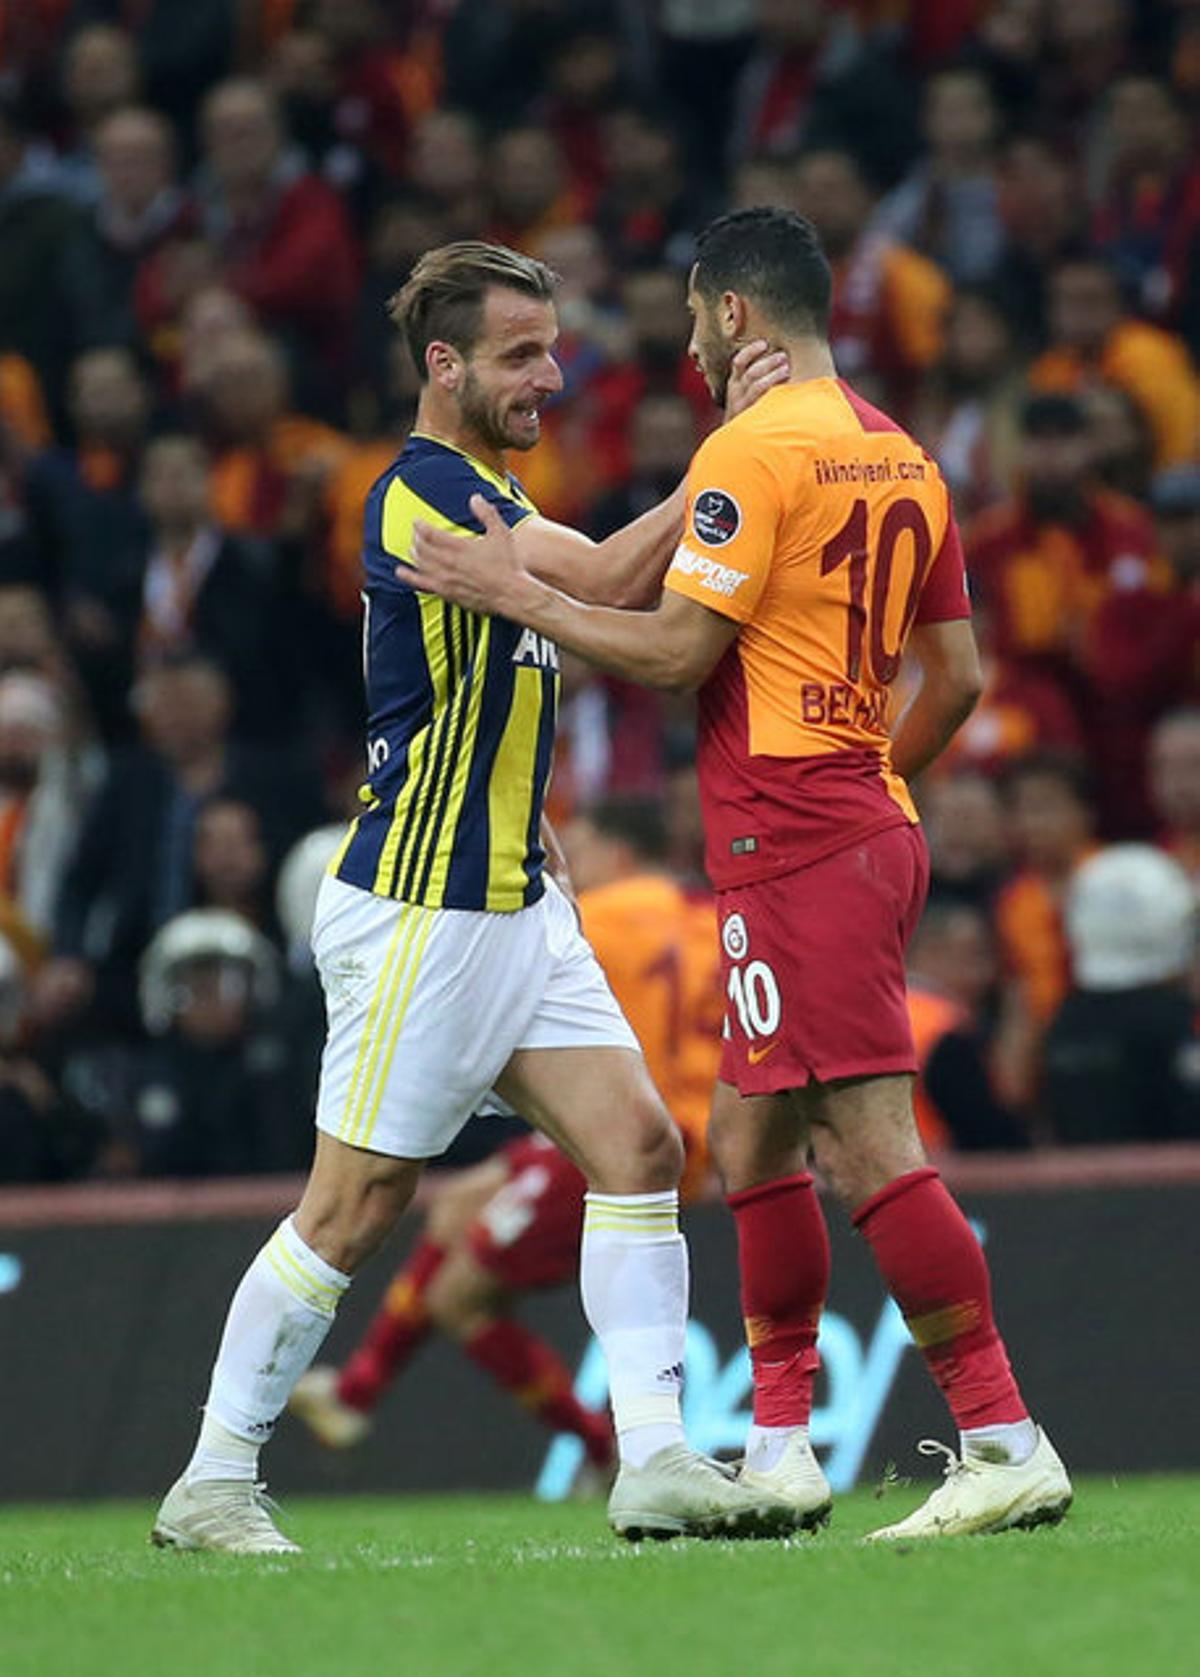 Fenerbahçe vs. Galatasaray